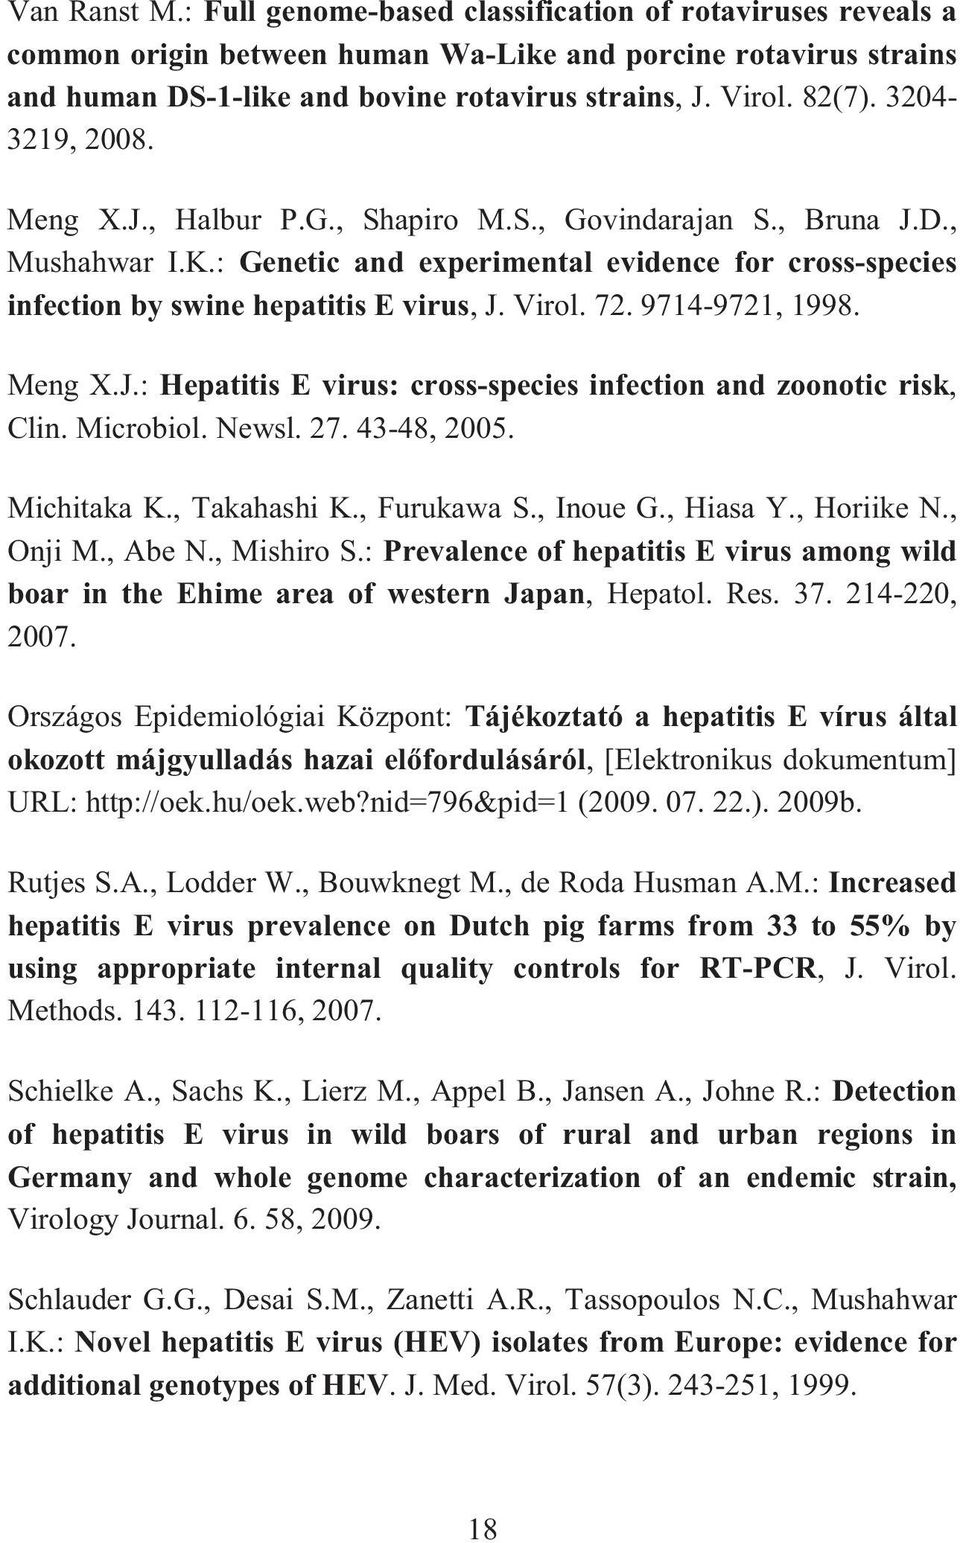 Virol. 72. 9714-9721, 1998. Meng X.J.: Hepatitis E virus: cross-species infection and zoonotic risk, Clin. Microbiol. Newsl. 27. 43-48, 2005. Michitaka K., Takahashi K., Furukawa S., Inoue G.